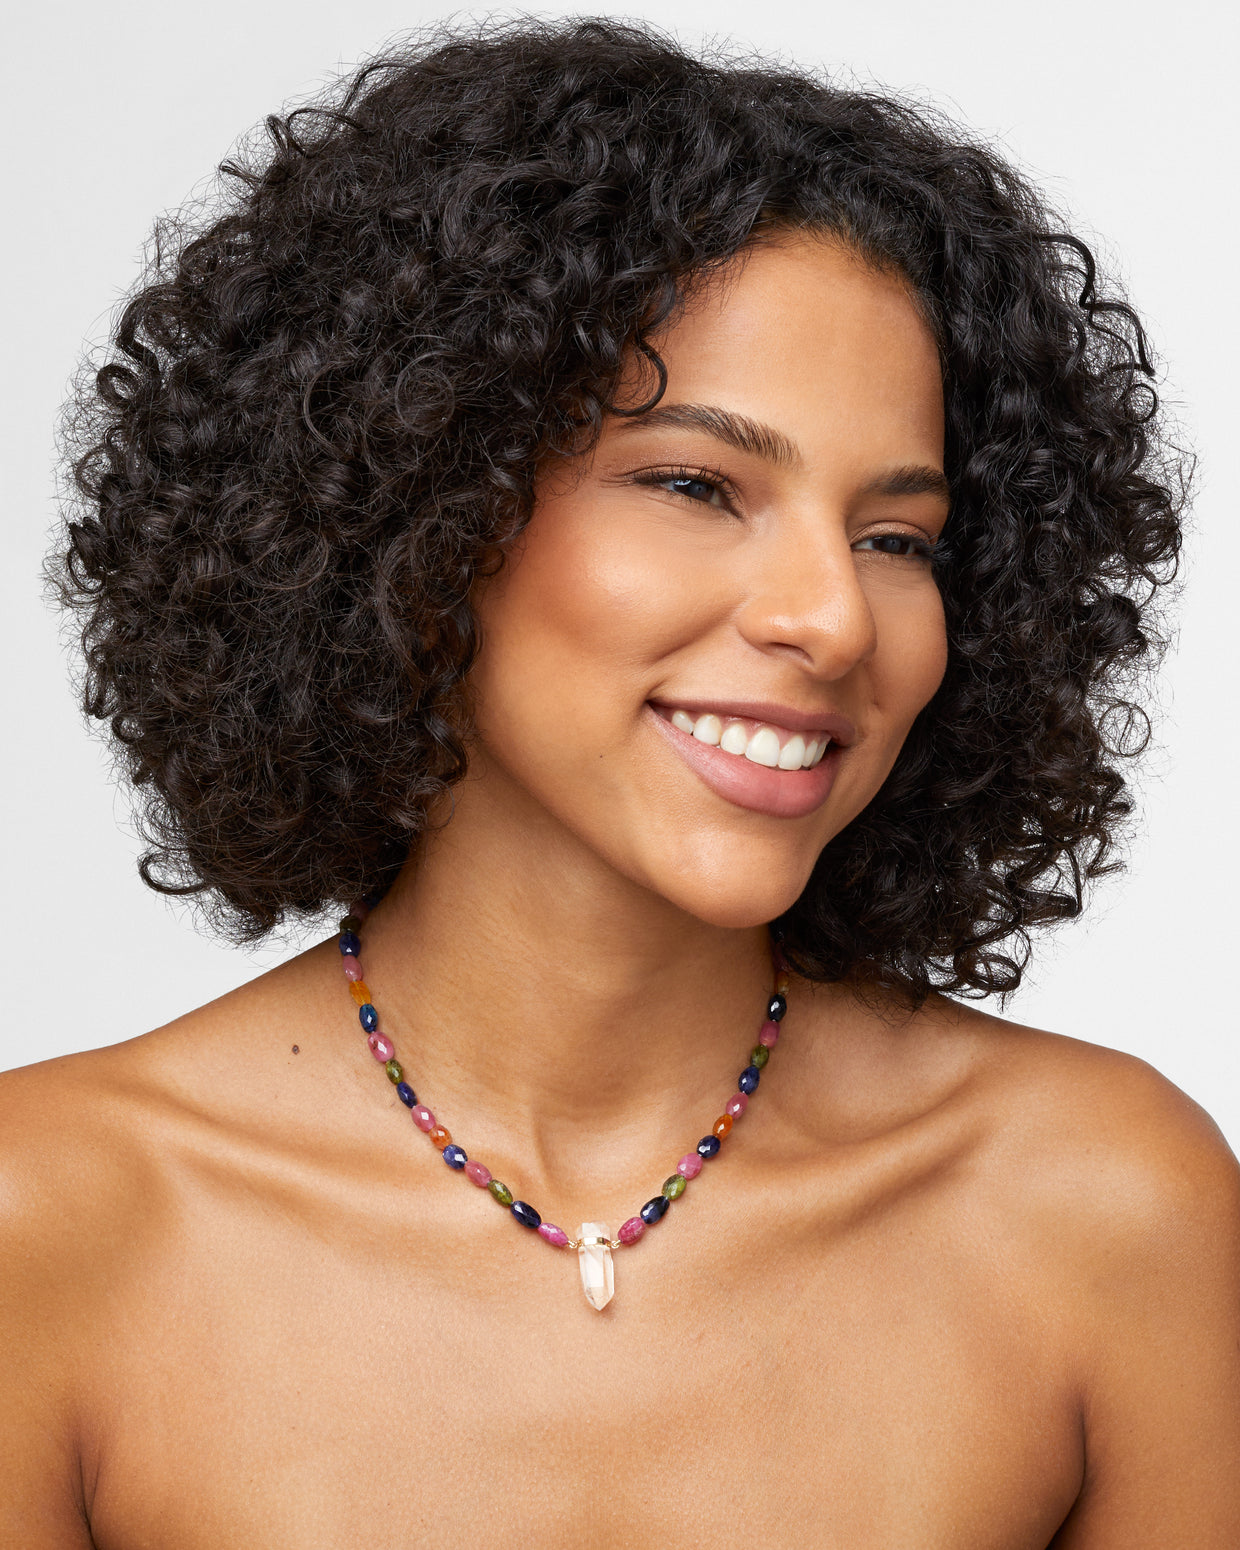 Arizona Large Sapphire Candy Crystal Quartz Necklace